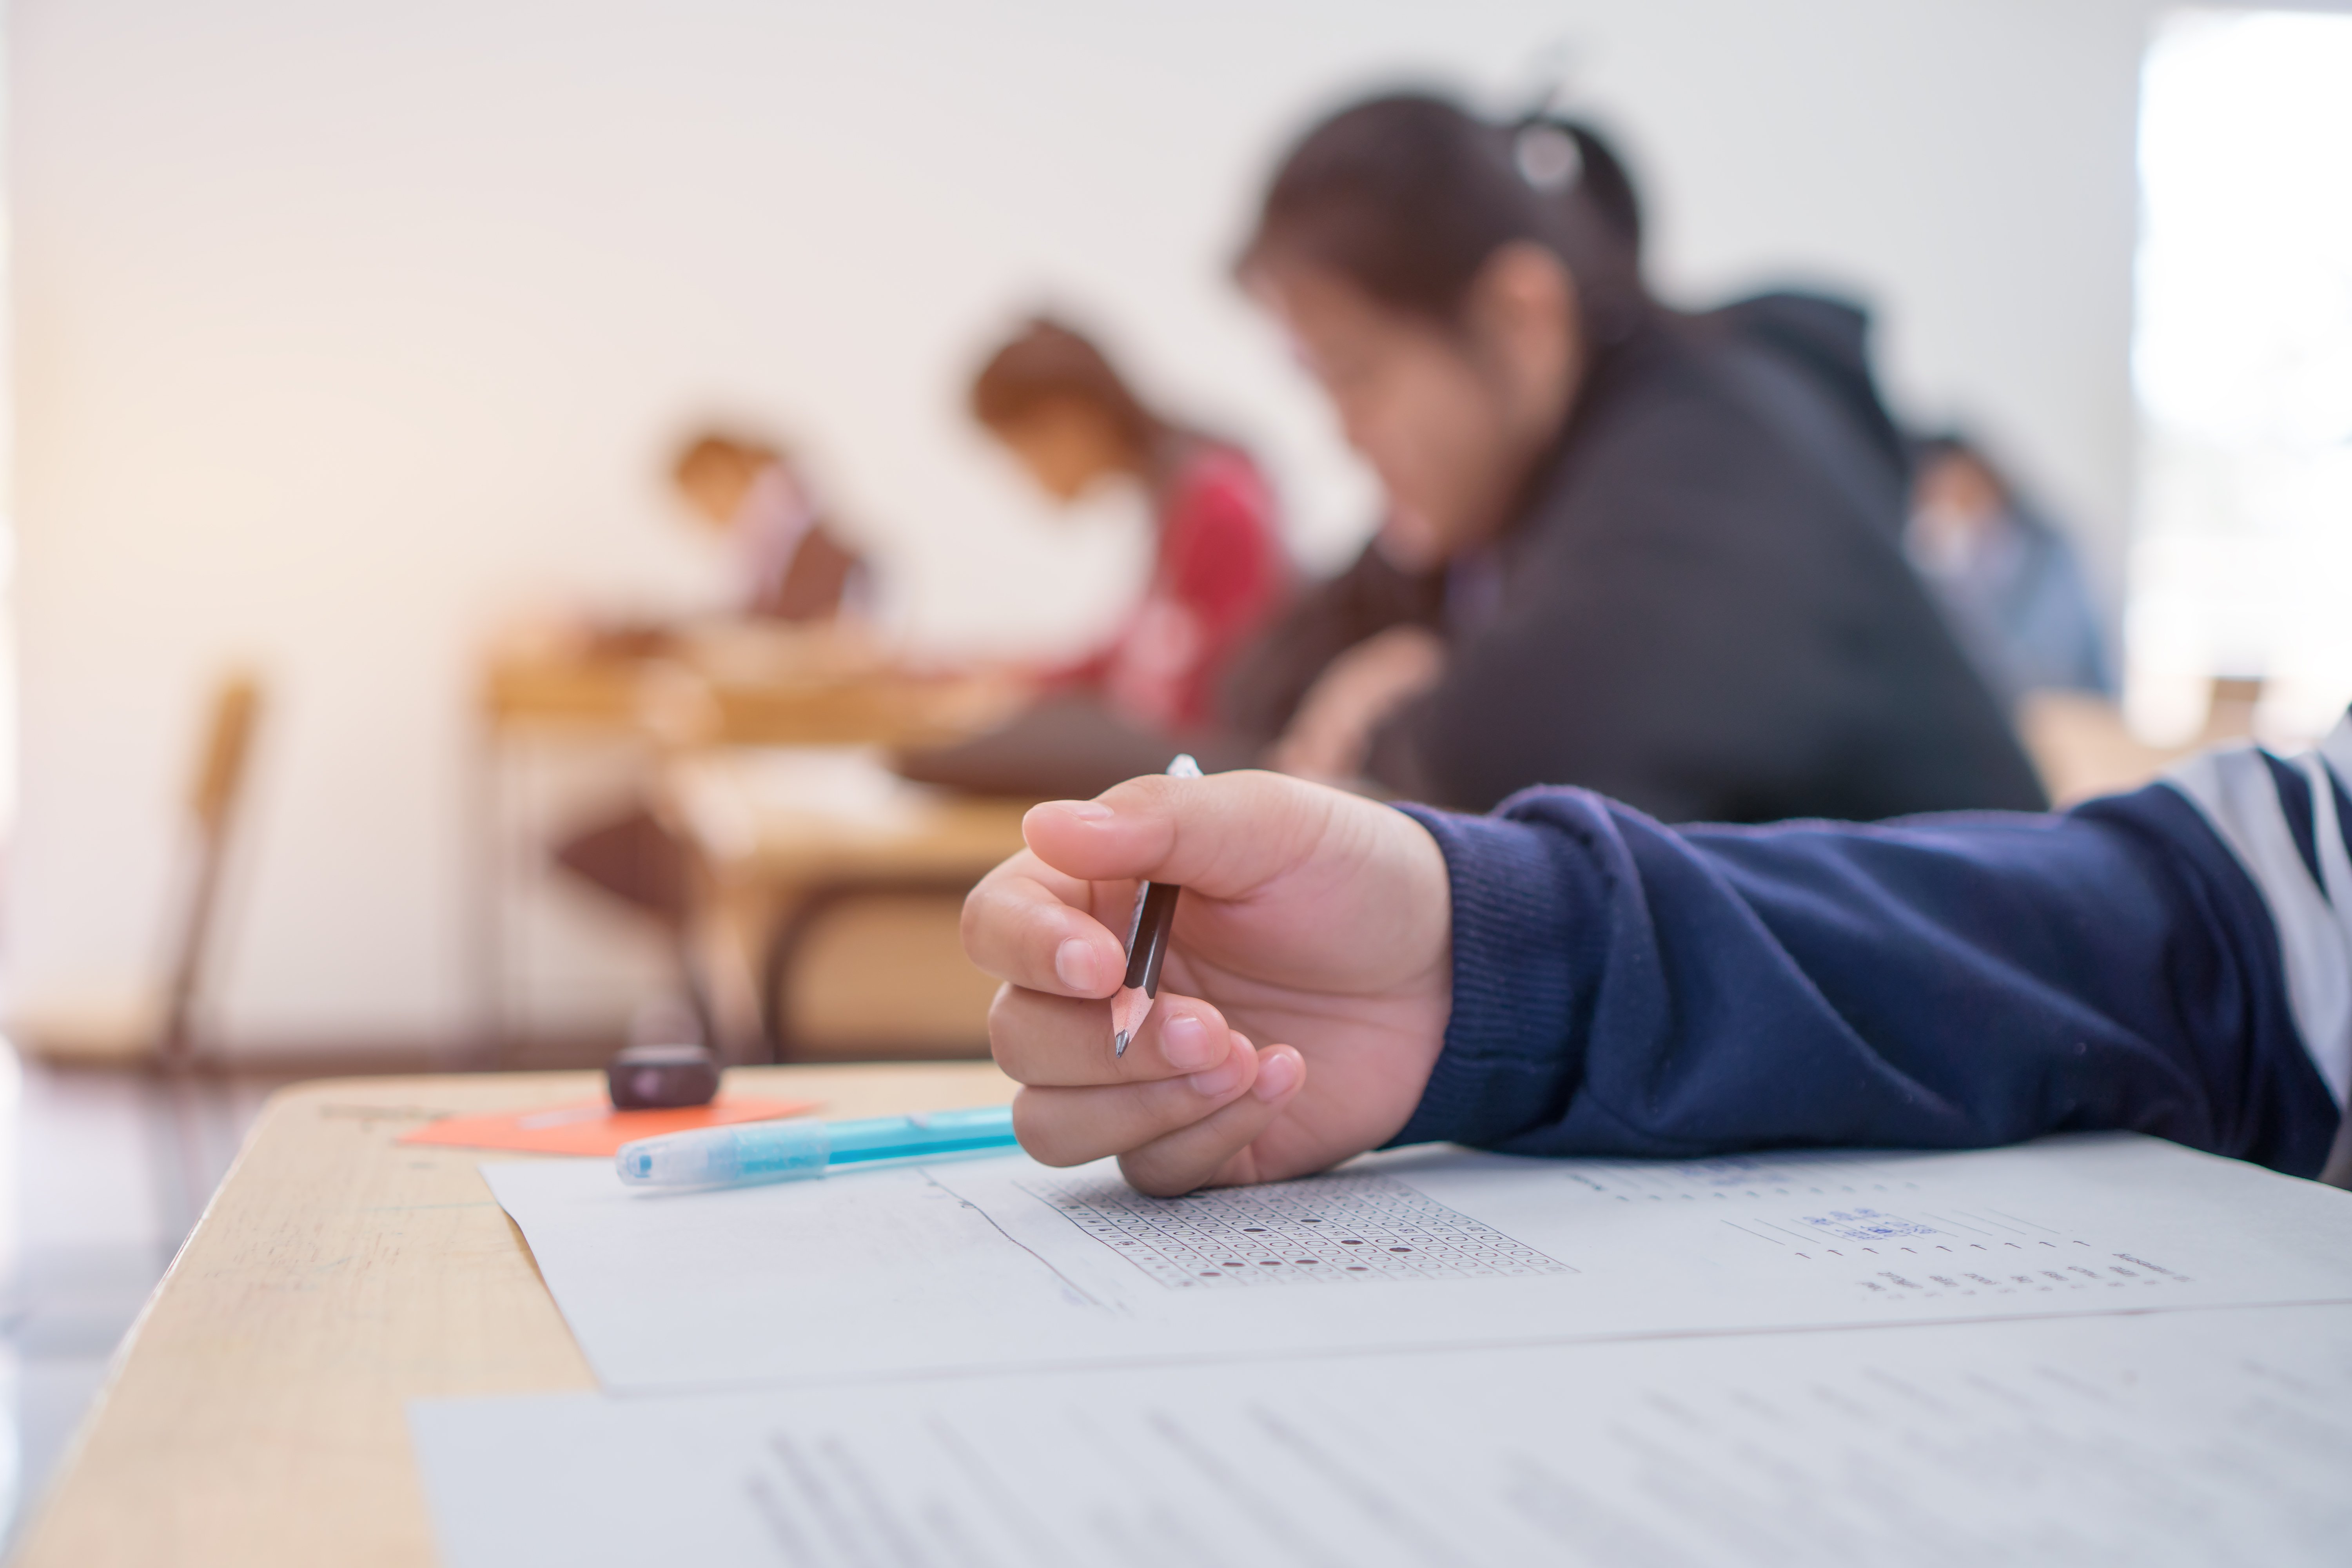 exams-test-student-high-school-university-student-holding-pencil-testing-exam-answer-sheet